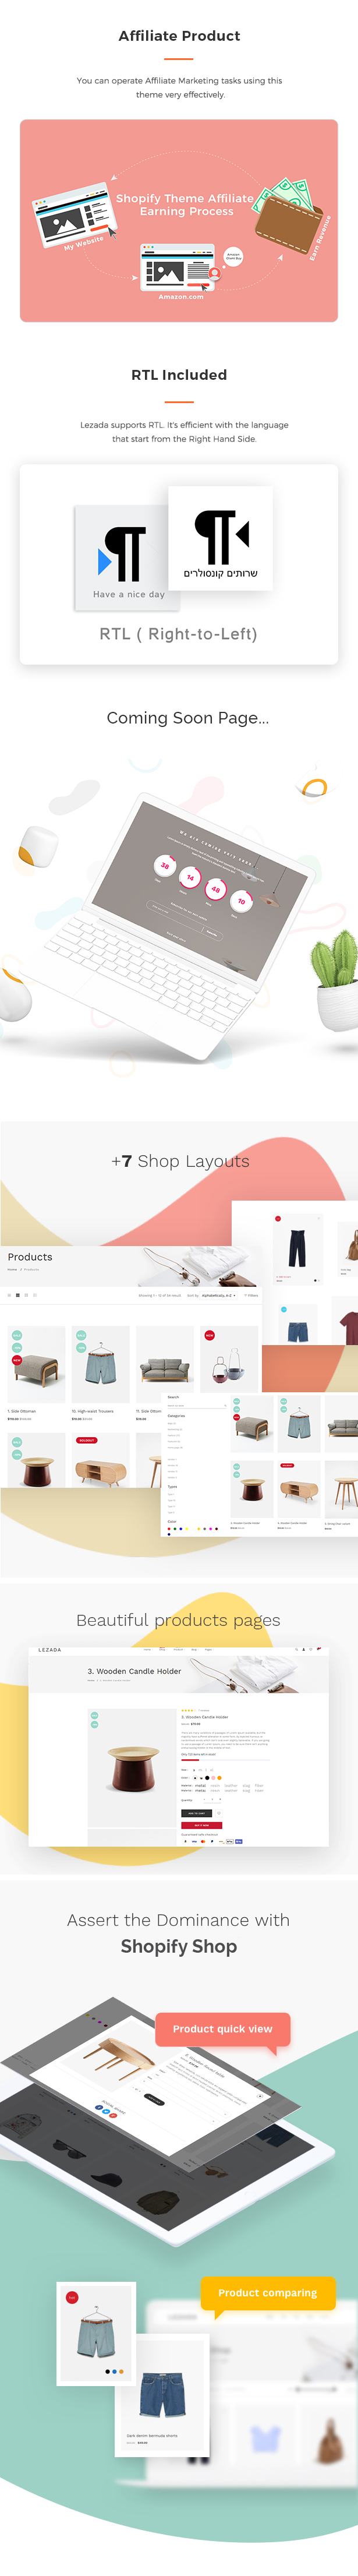 Lezada - Fully Customizable Multipurpose Shopify Theme - 13